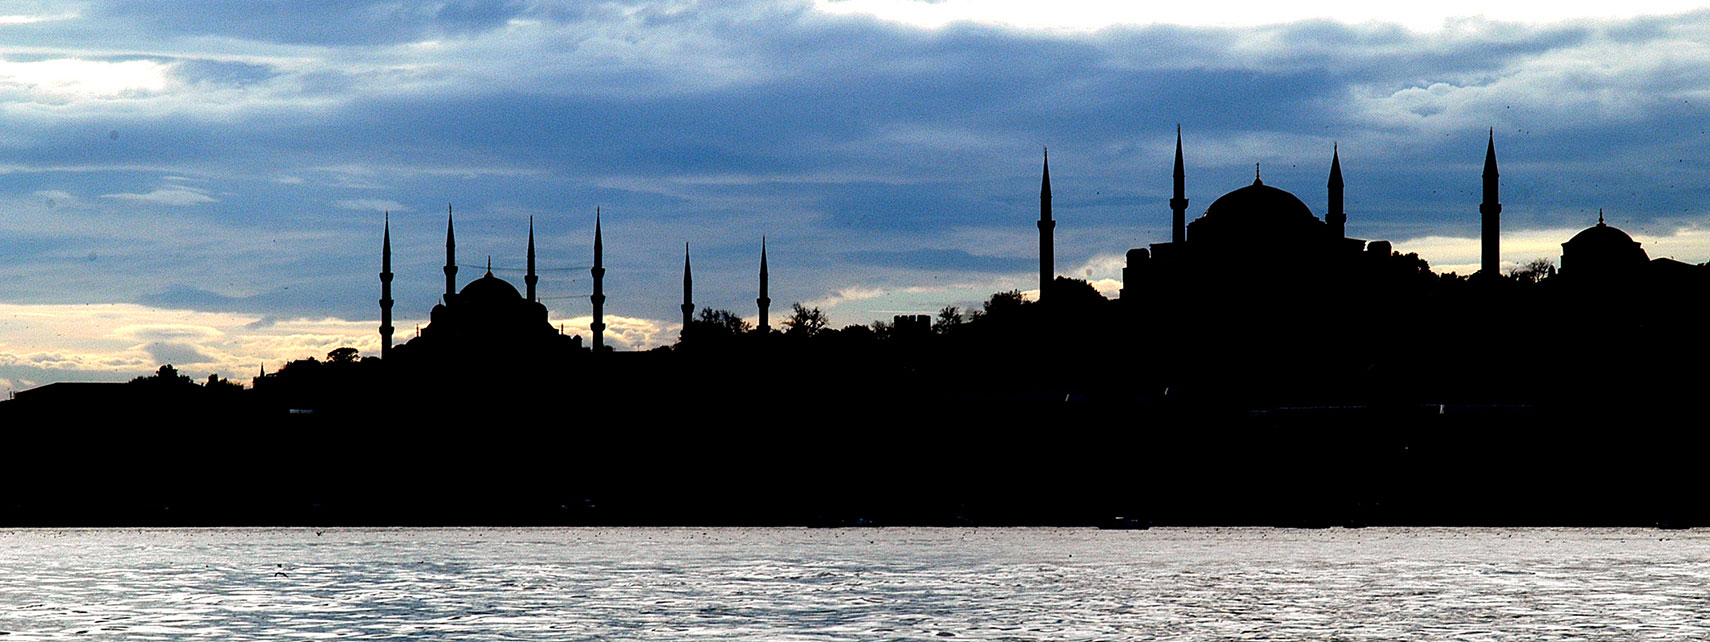 Sultanahmet Mosque (Blue Mosque) and Hagia Sophia (Ayasofya) in Istanbul